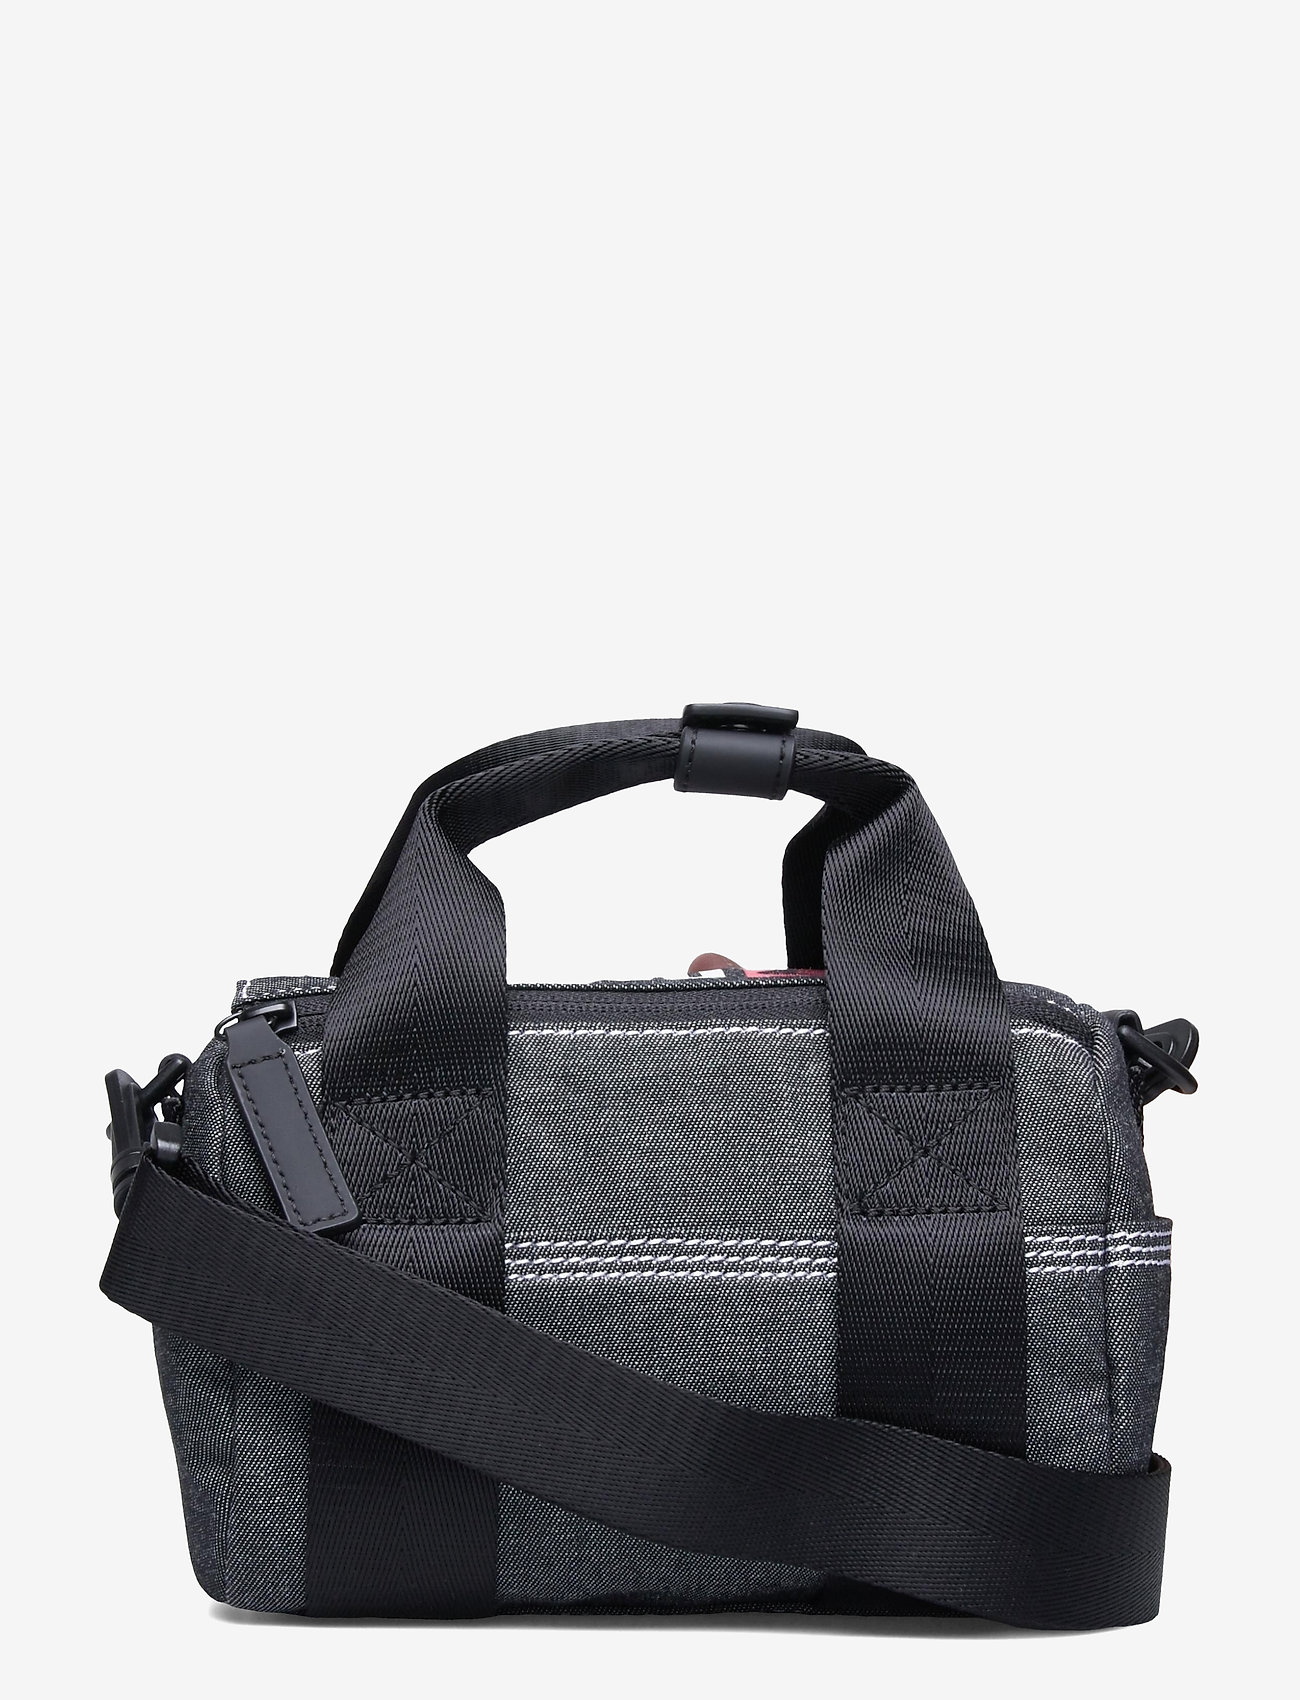 Diesel - MINI DUFFLE handbag - spordikotid - black denim - 0